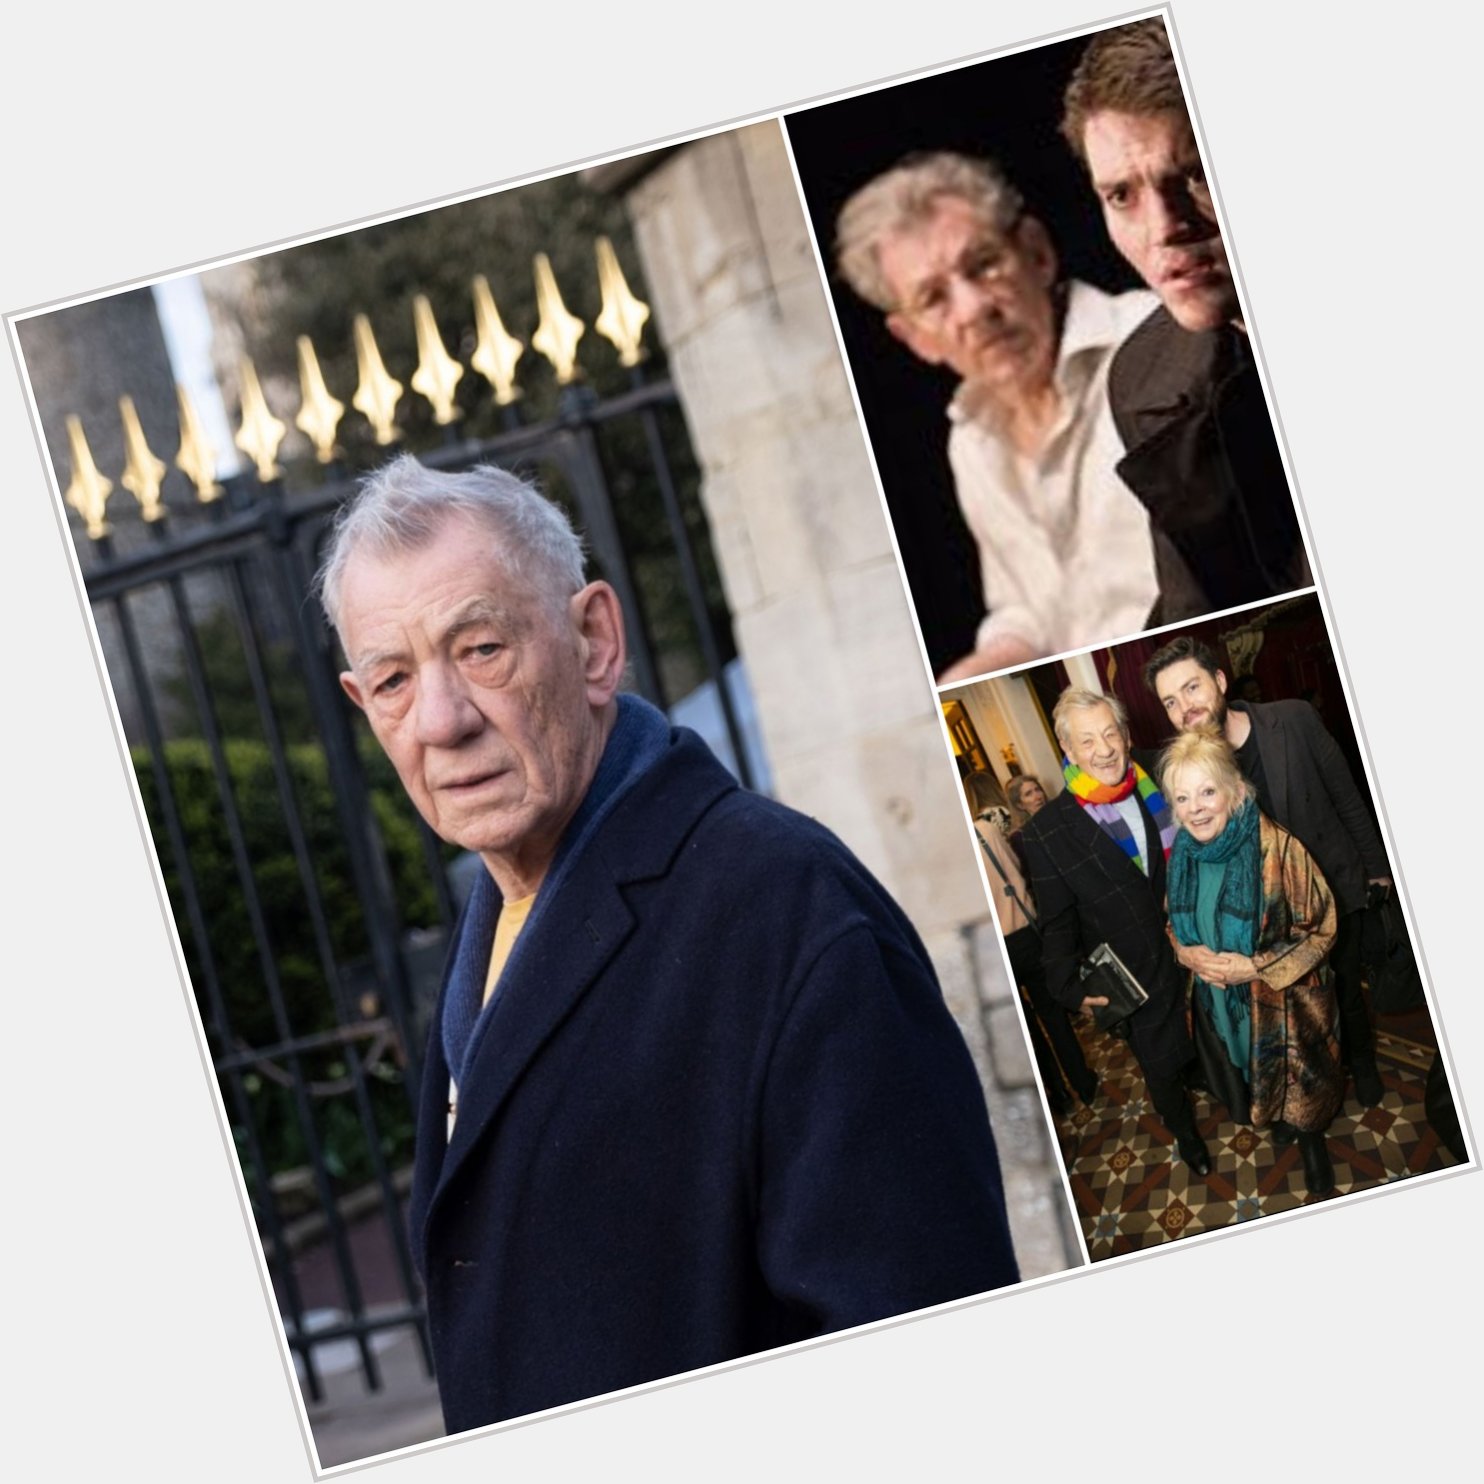  also the birthday of Sir Ian McKellen so happy birthday to you too Sir Ian 